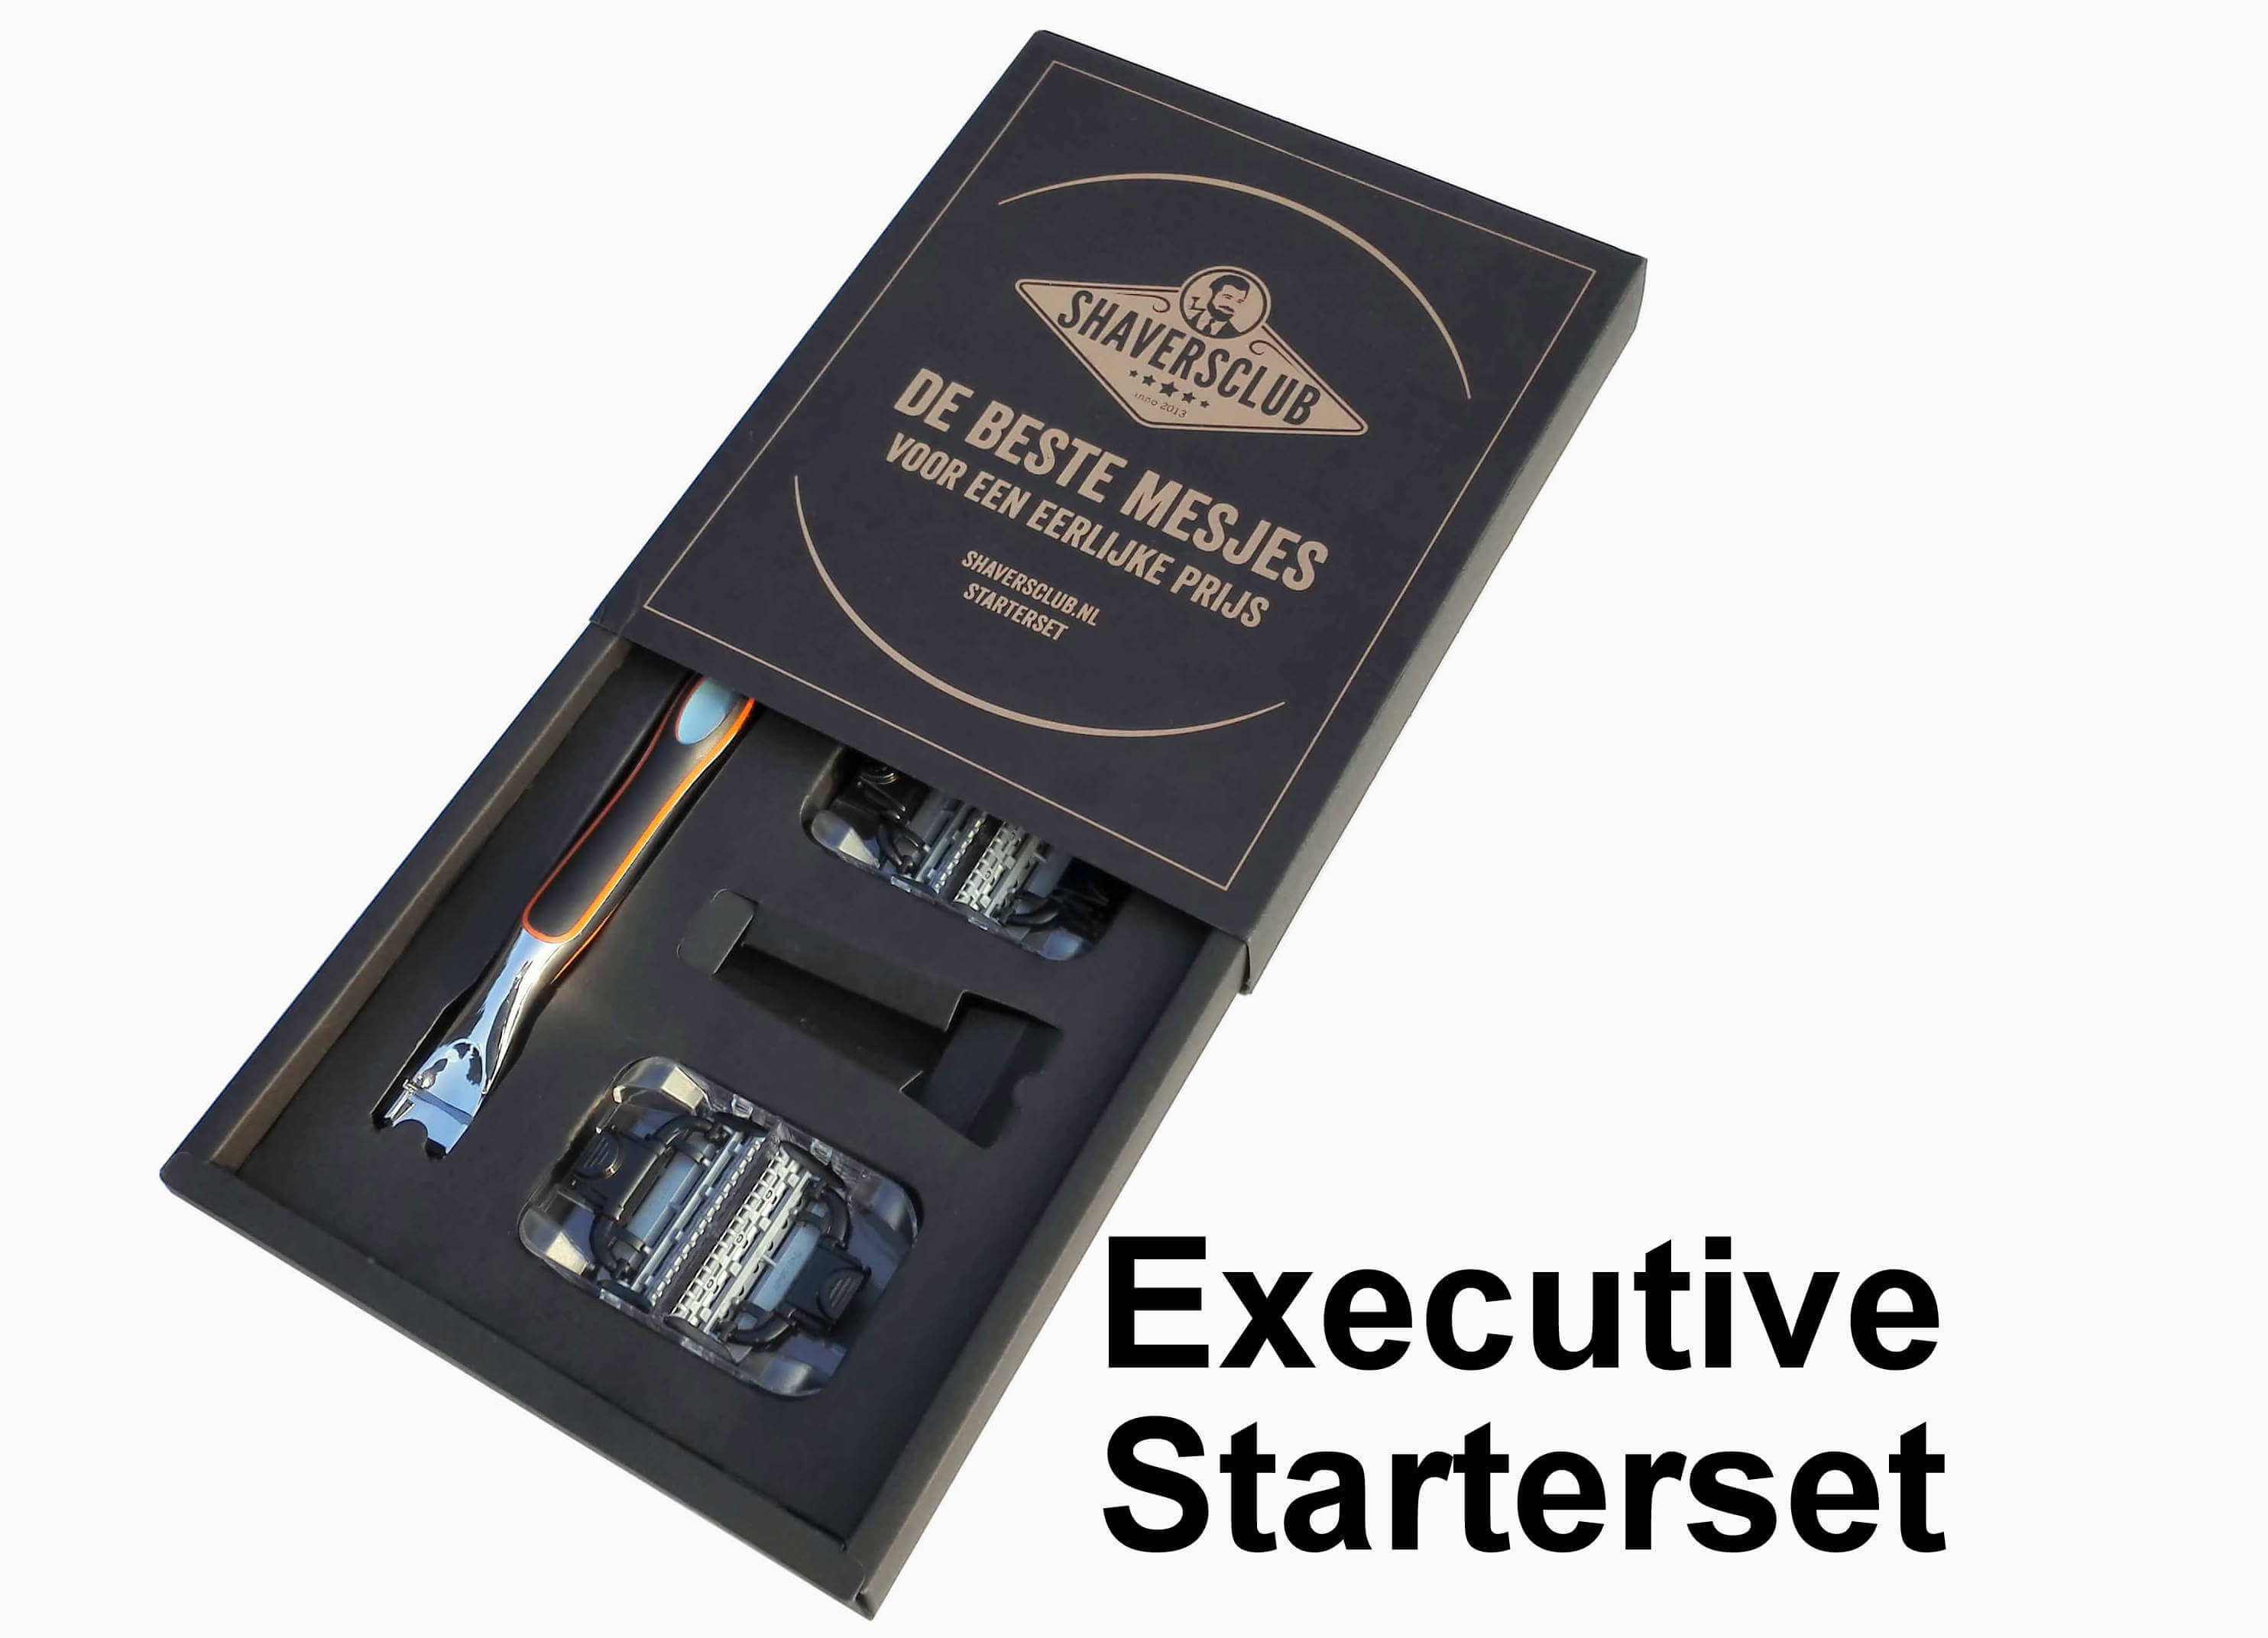 Shaversclub The Executive – Starterset – 1 houder, 4 mesjes (Incl. nalevering 4 mesjes t.w.v. €10,-)